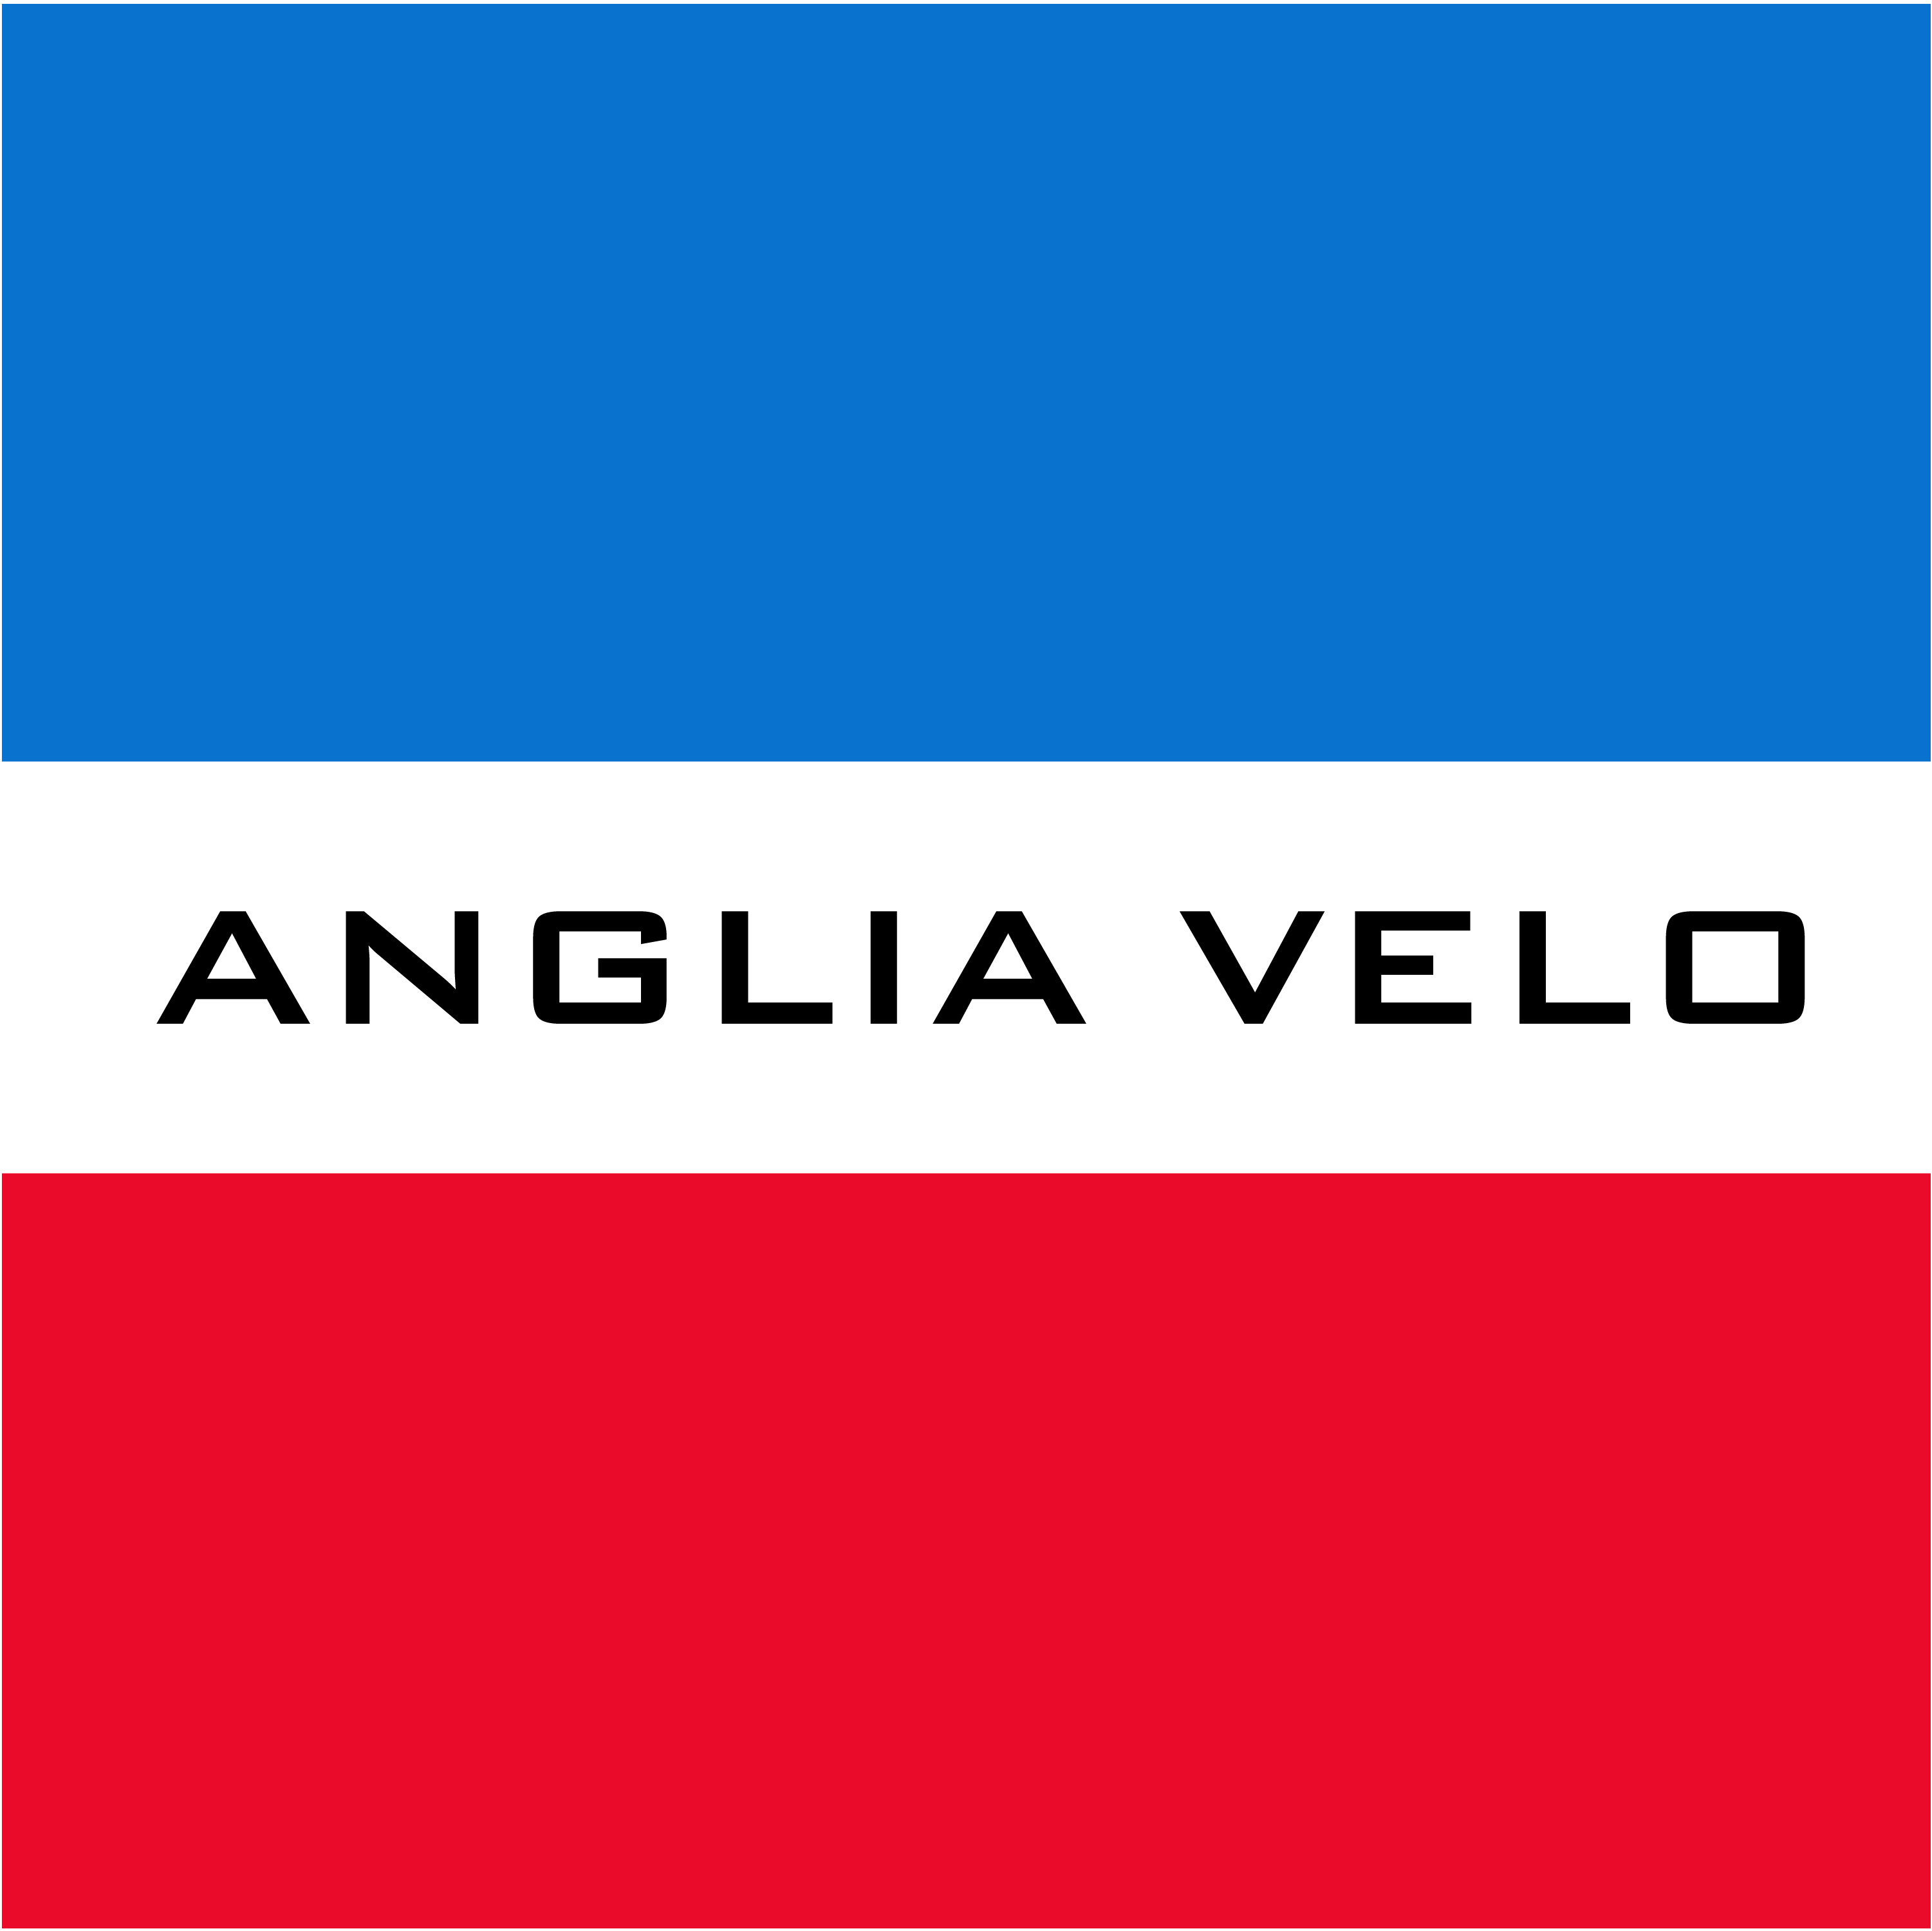 Club Image for ANGLIA VELO